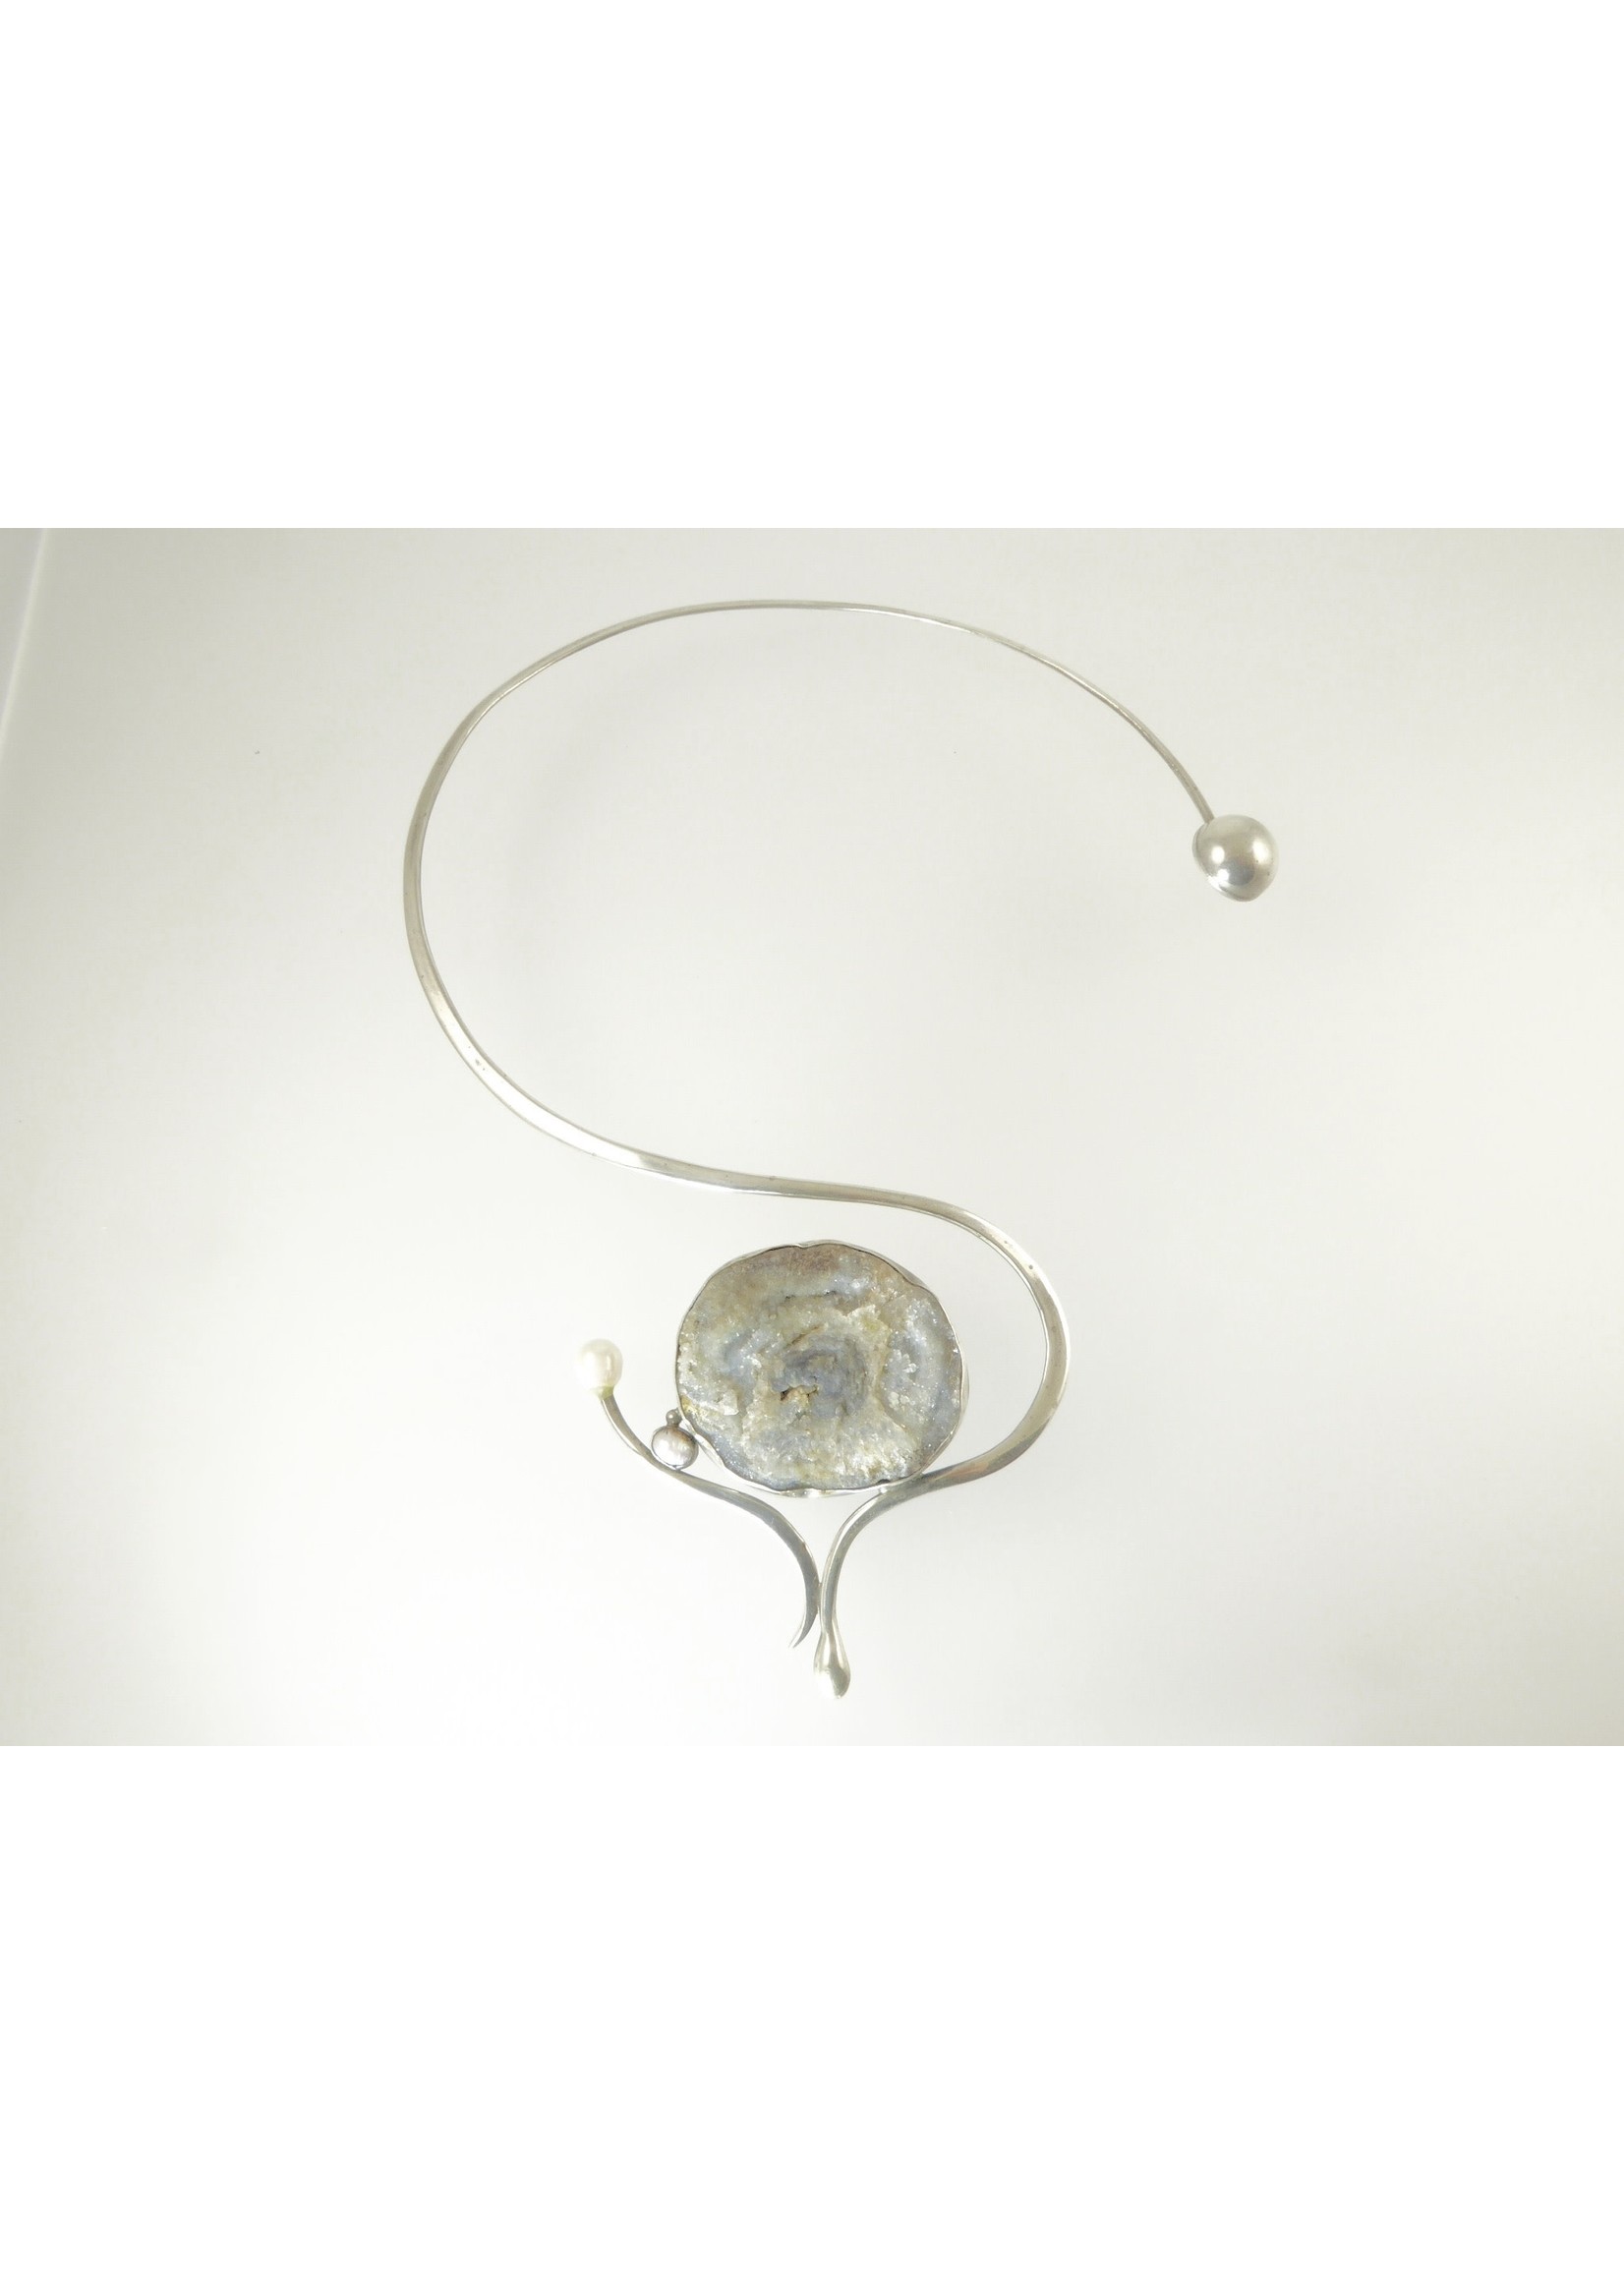 Lisa Kramer Vintage Jewelry Rachel Gera Sterling Silver Necklace